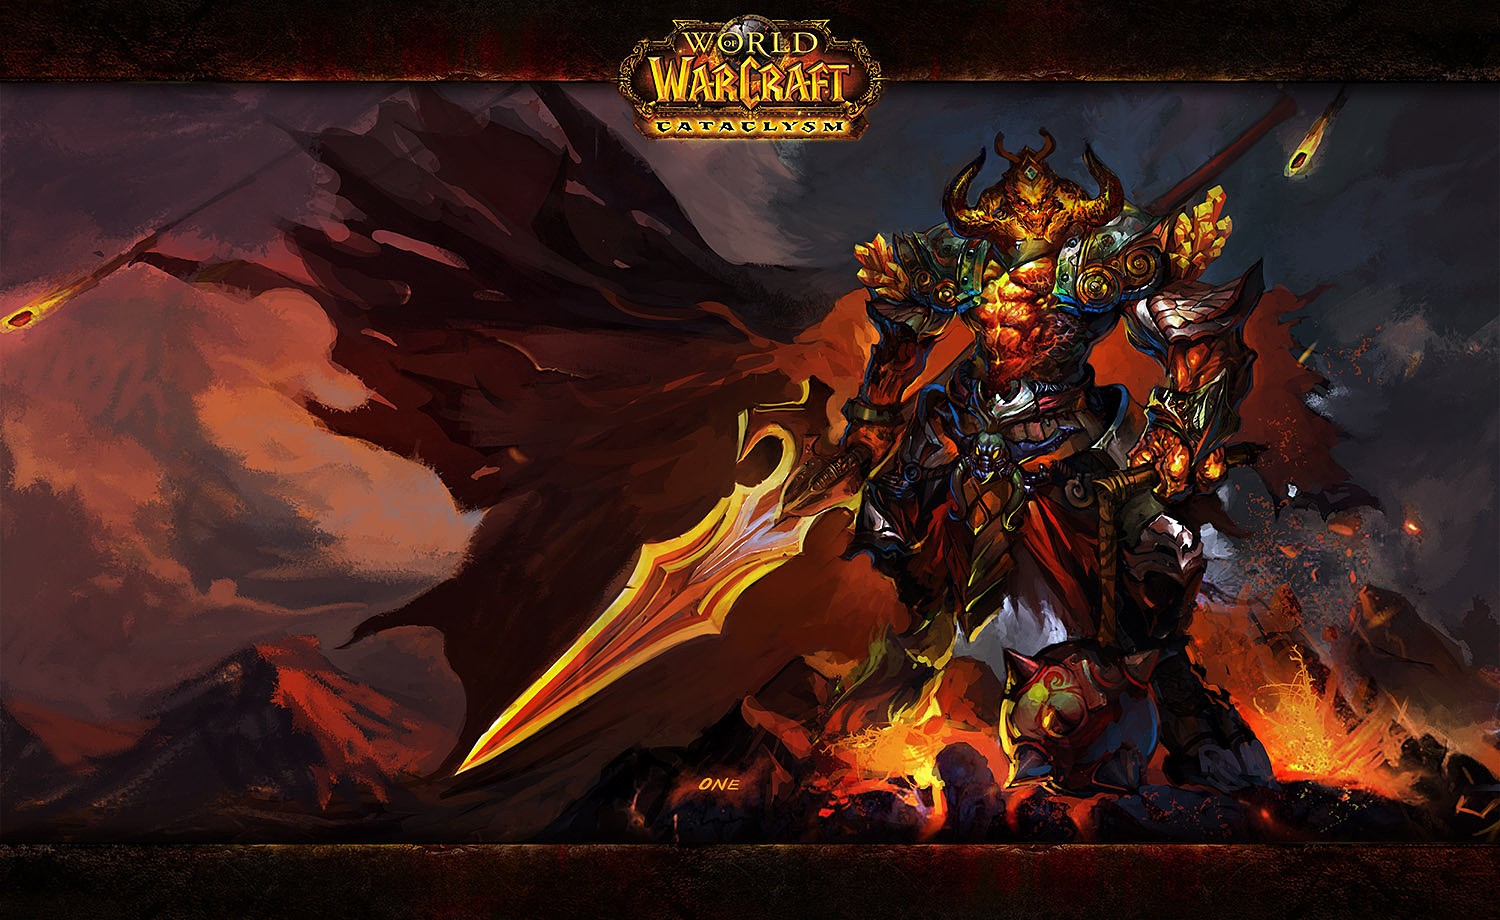 General 1500x920 World of Warcraft PC gaming World of Warcraft: Cataclysm fantasy art Blizzard Entertainment video game art